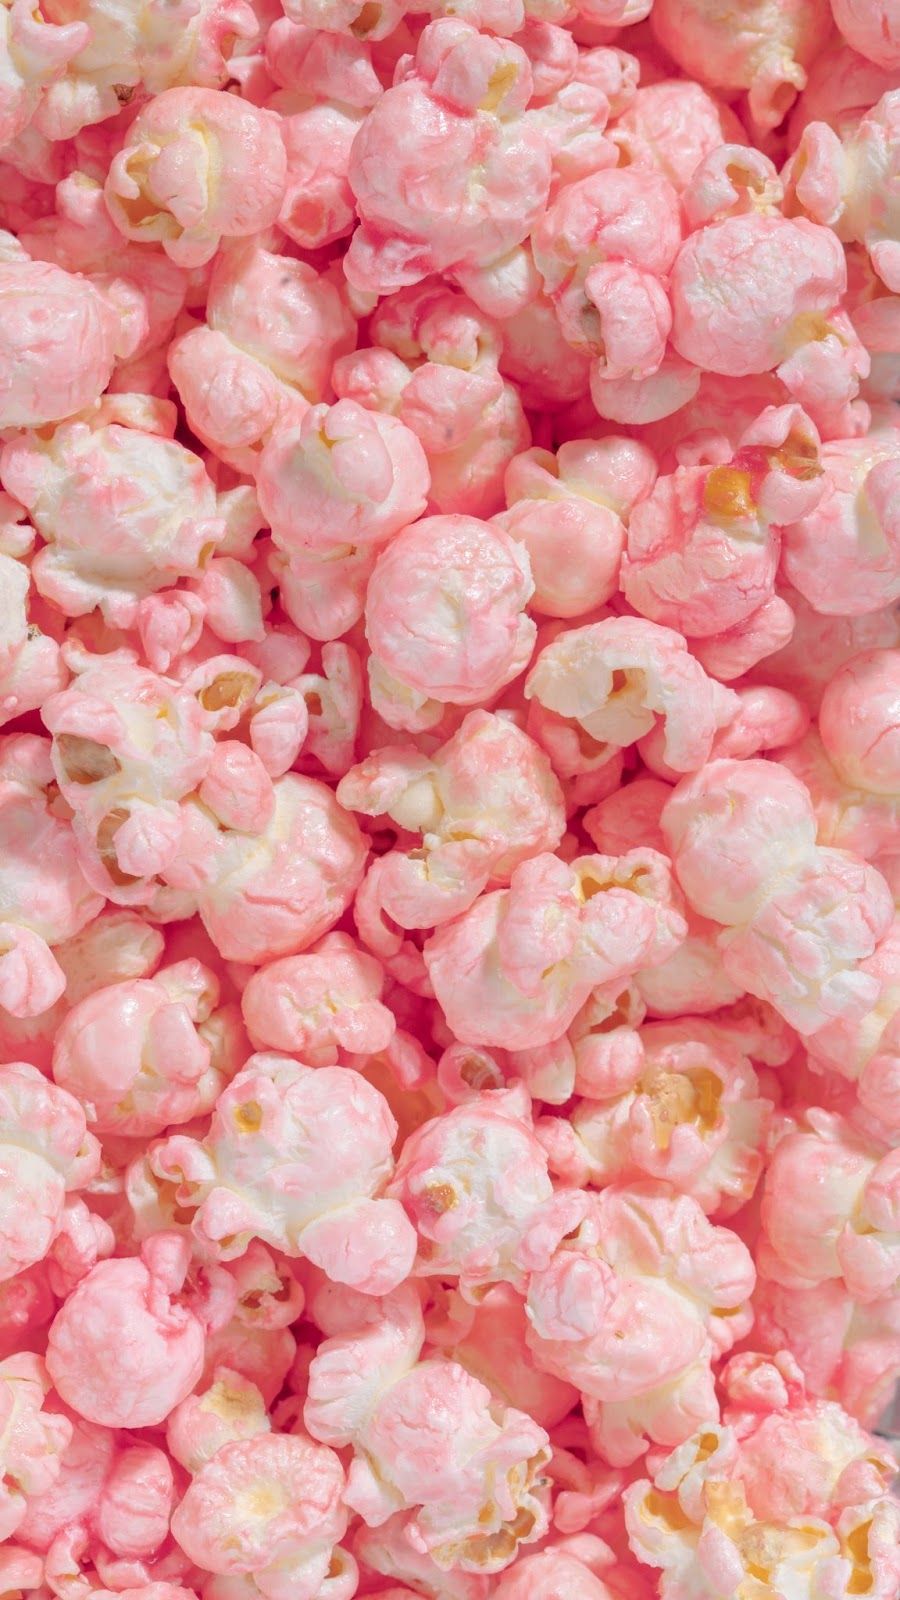 Skinny Pop Popcorn At Costco Review